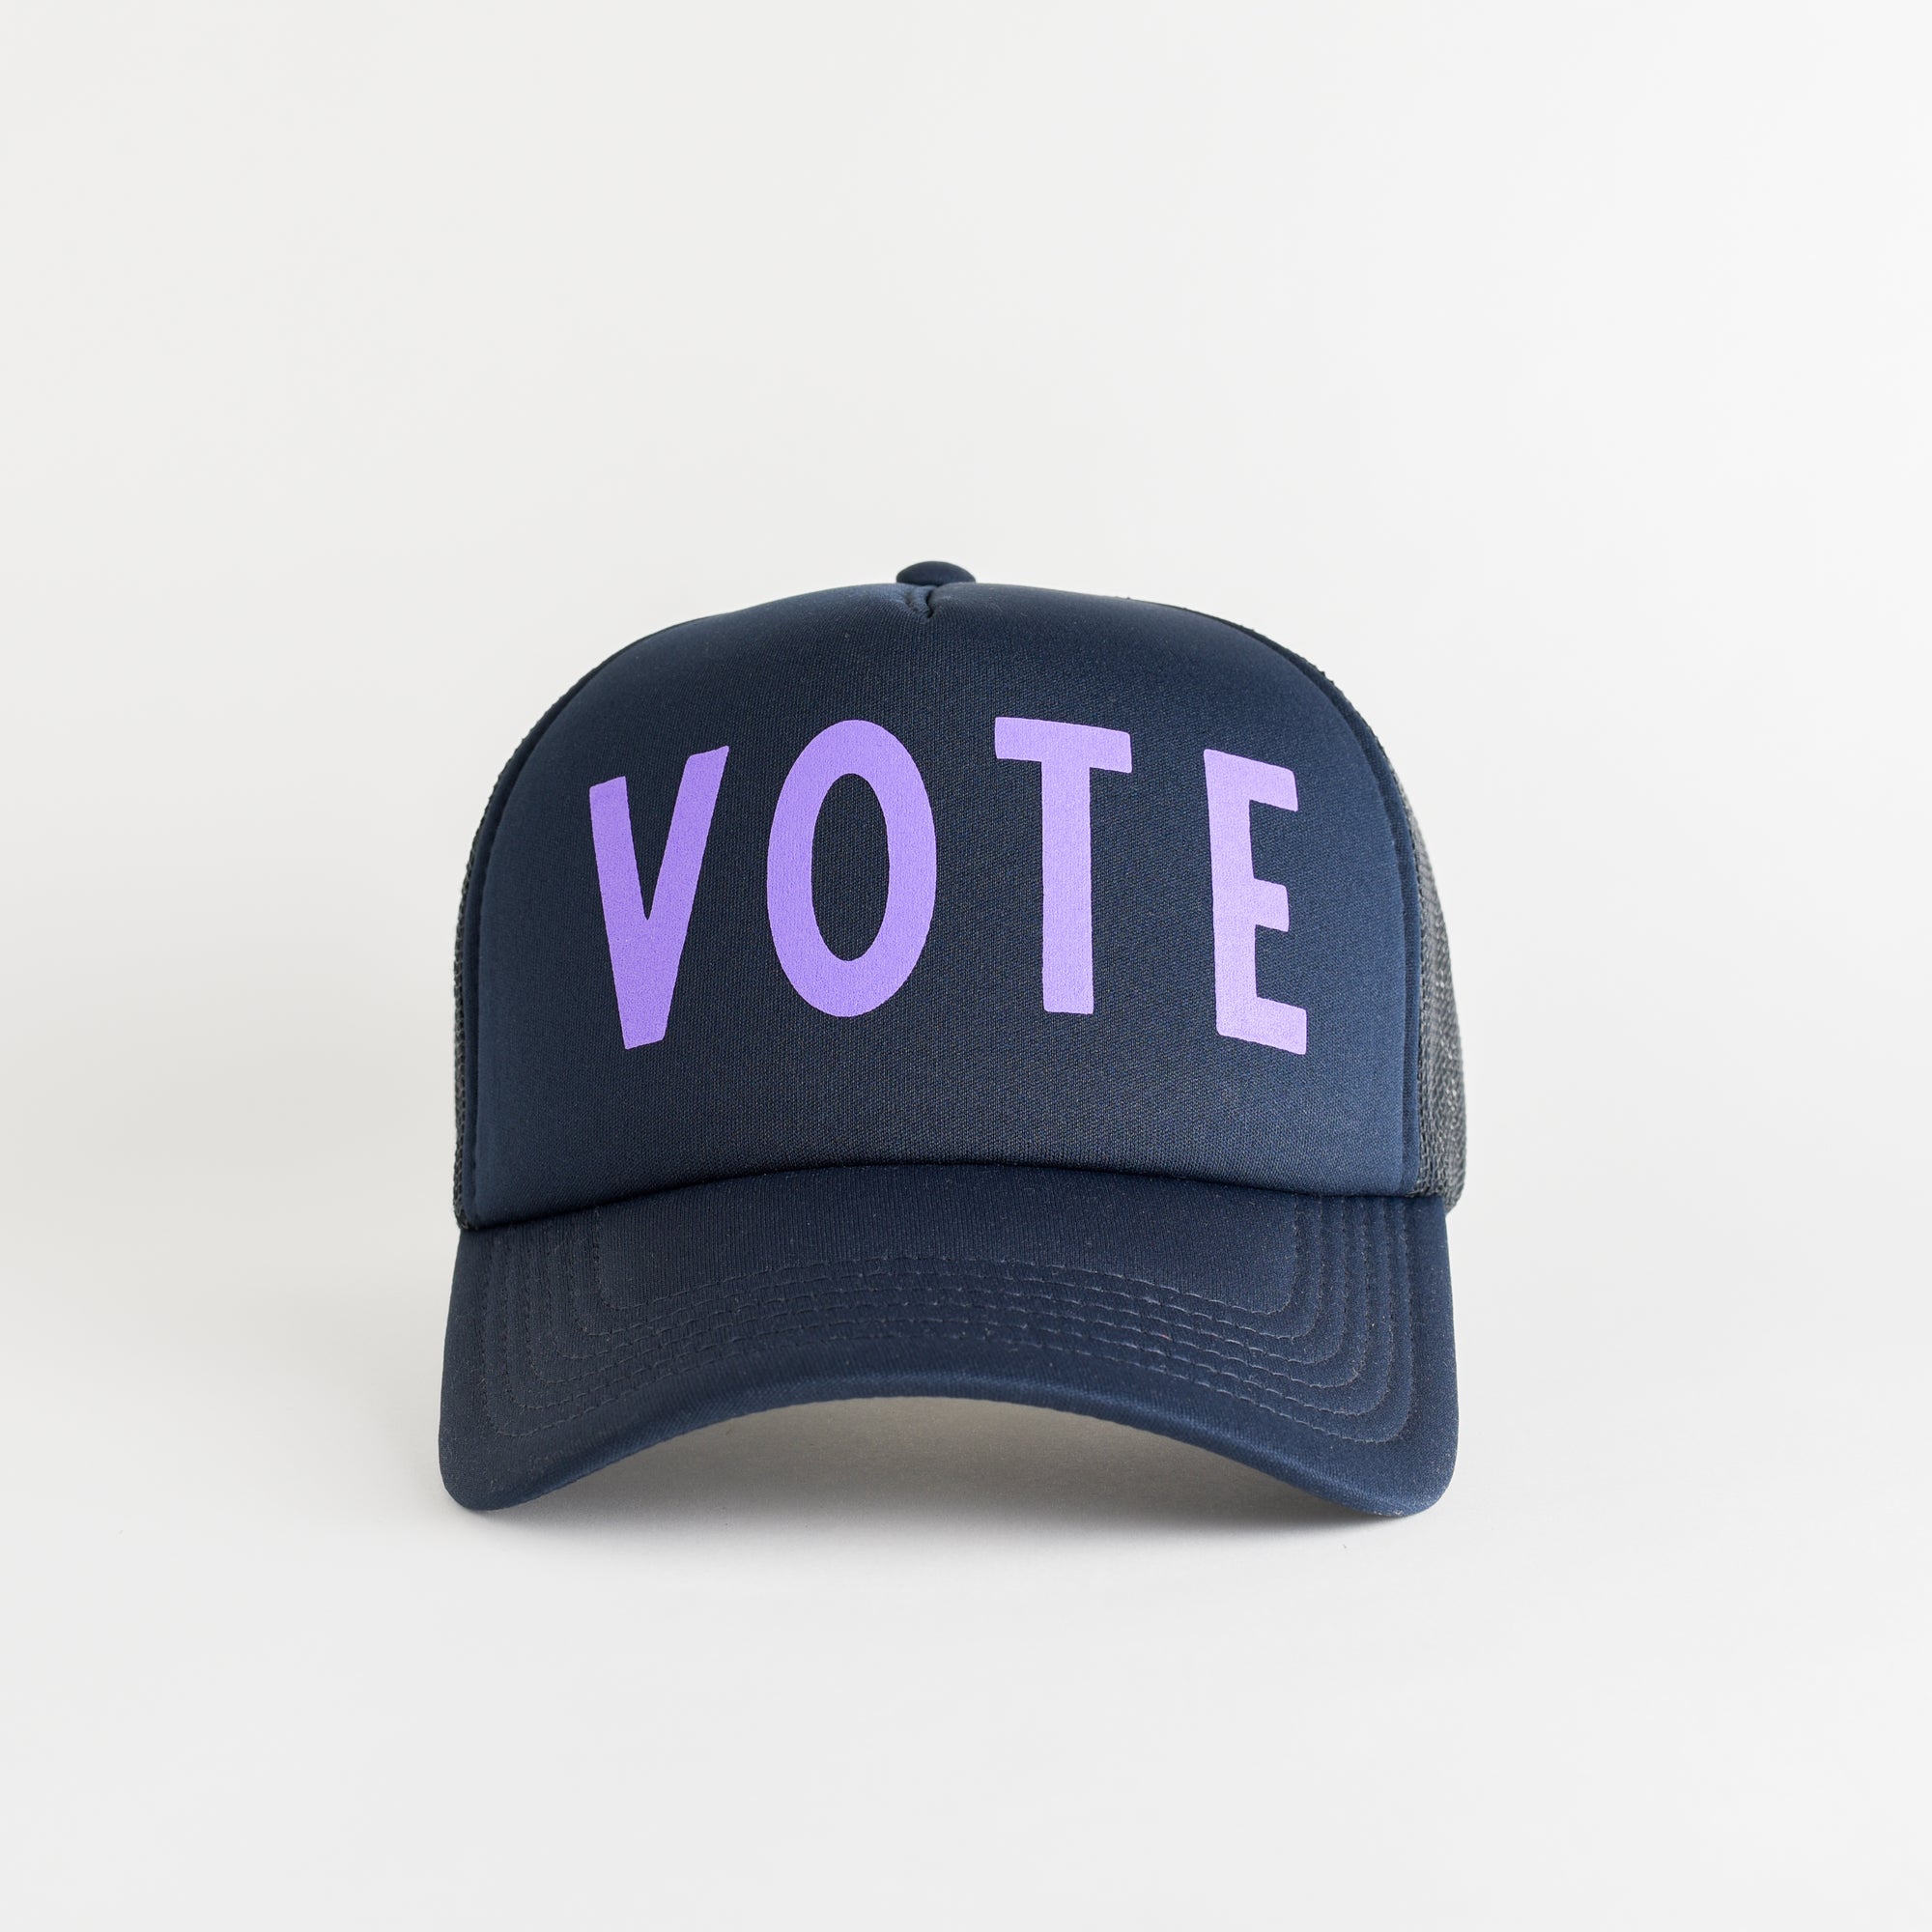 Vote Recycled Trucker Hat - navy